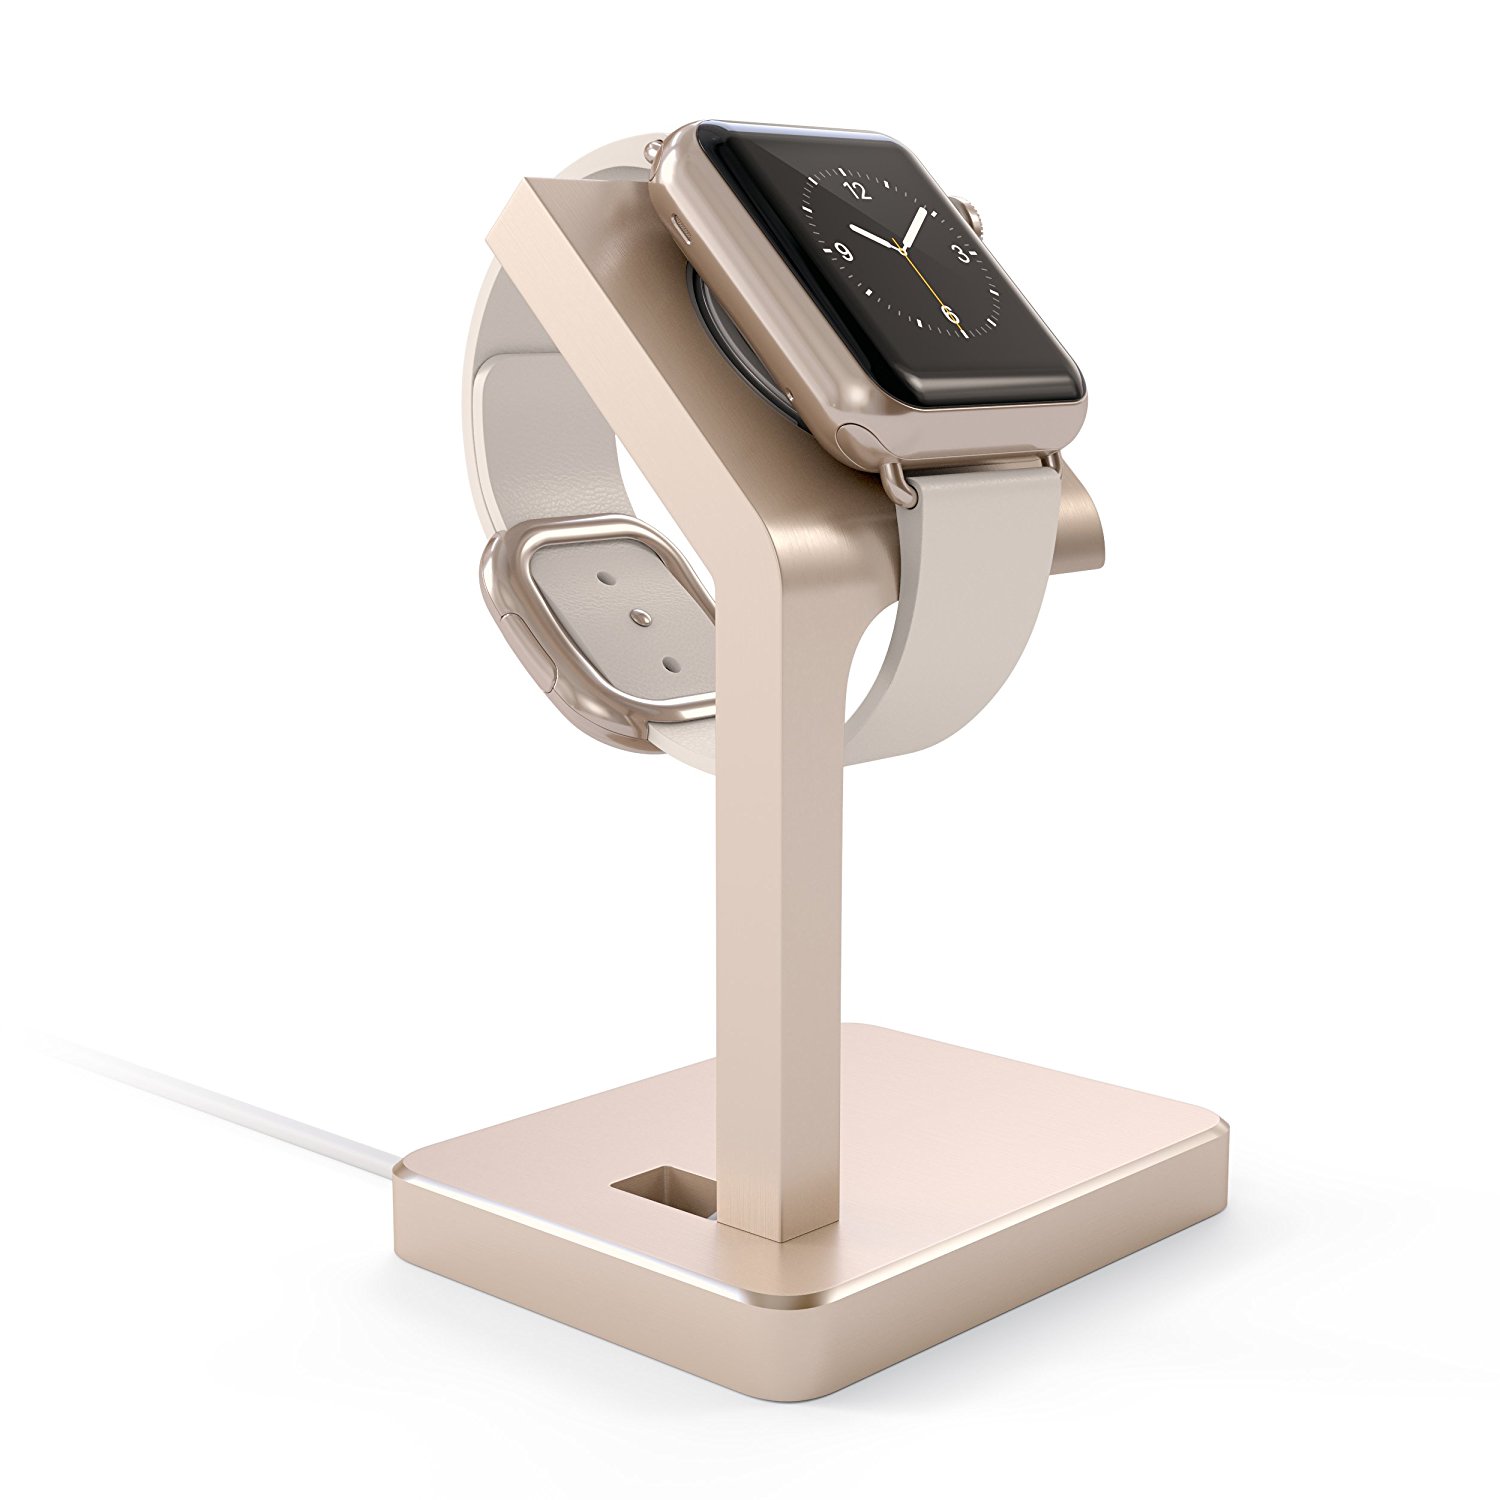 Satechi、アルミニウムデザインの｢Apple Watch｣用充電スタンドを35％オフで販売するセールを開催中